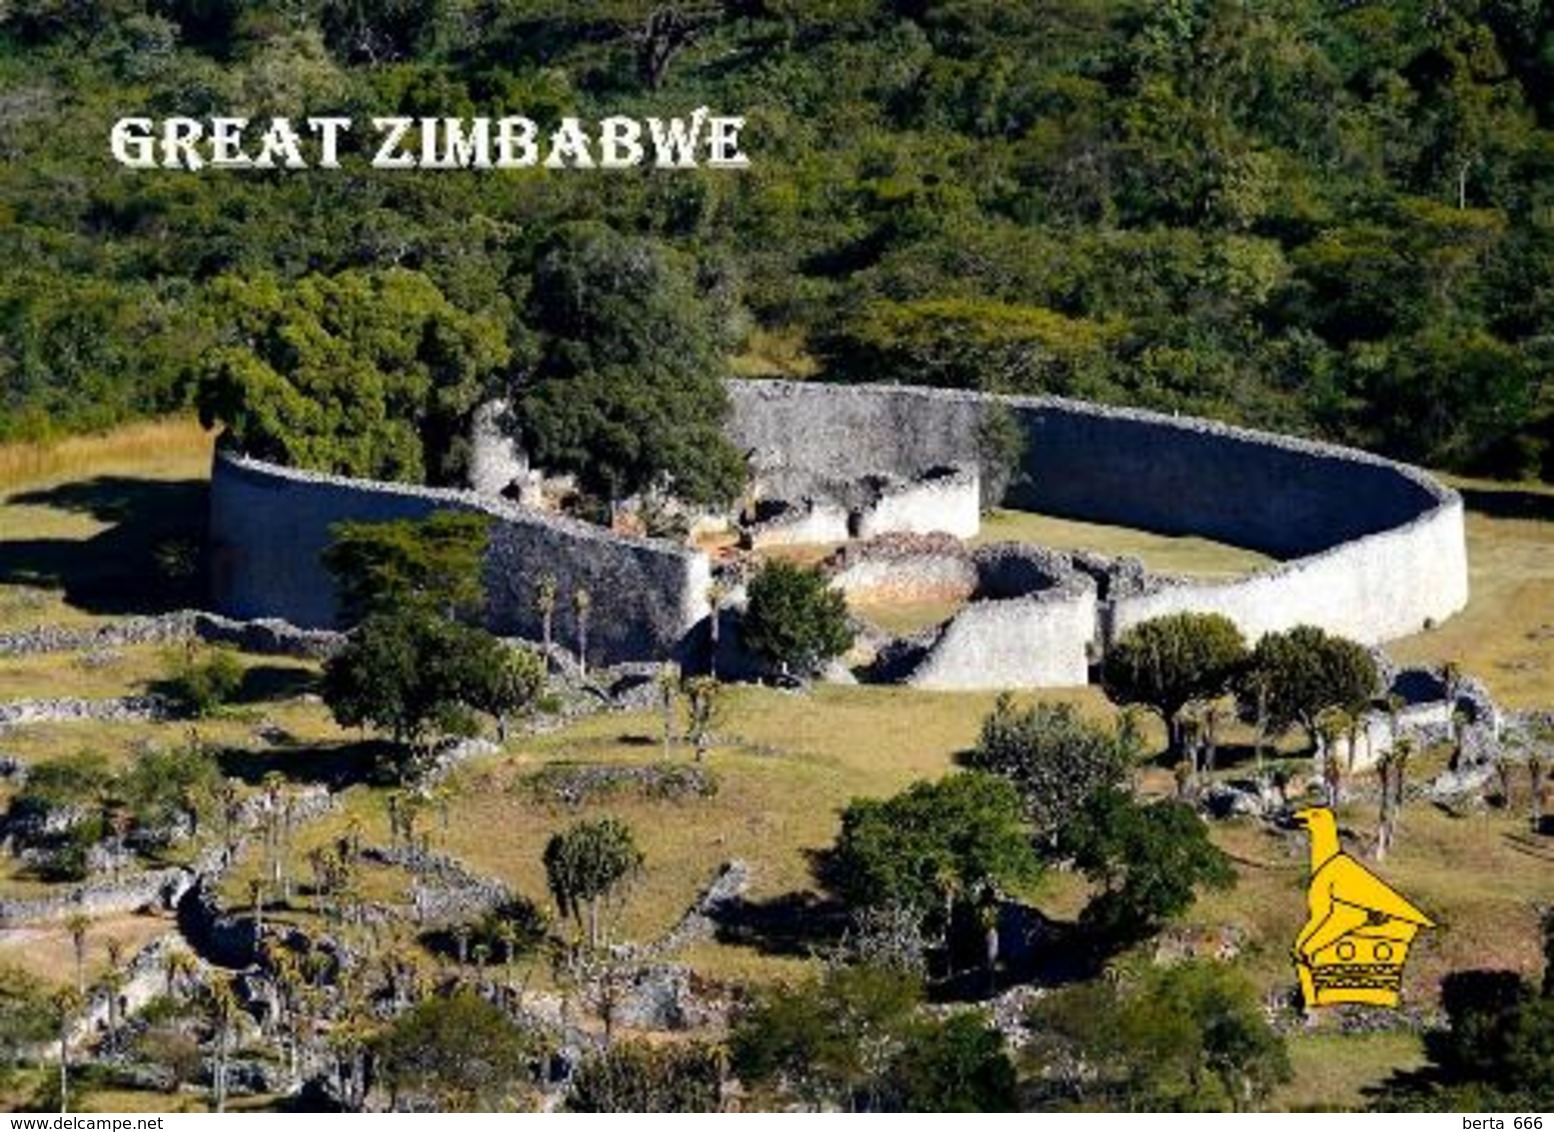 Zimbabwe Great Zimbabwe UNESCO New Postcard - Zimbabwe